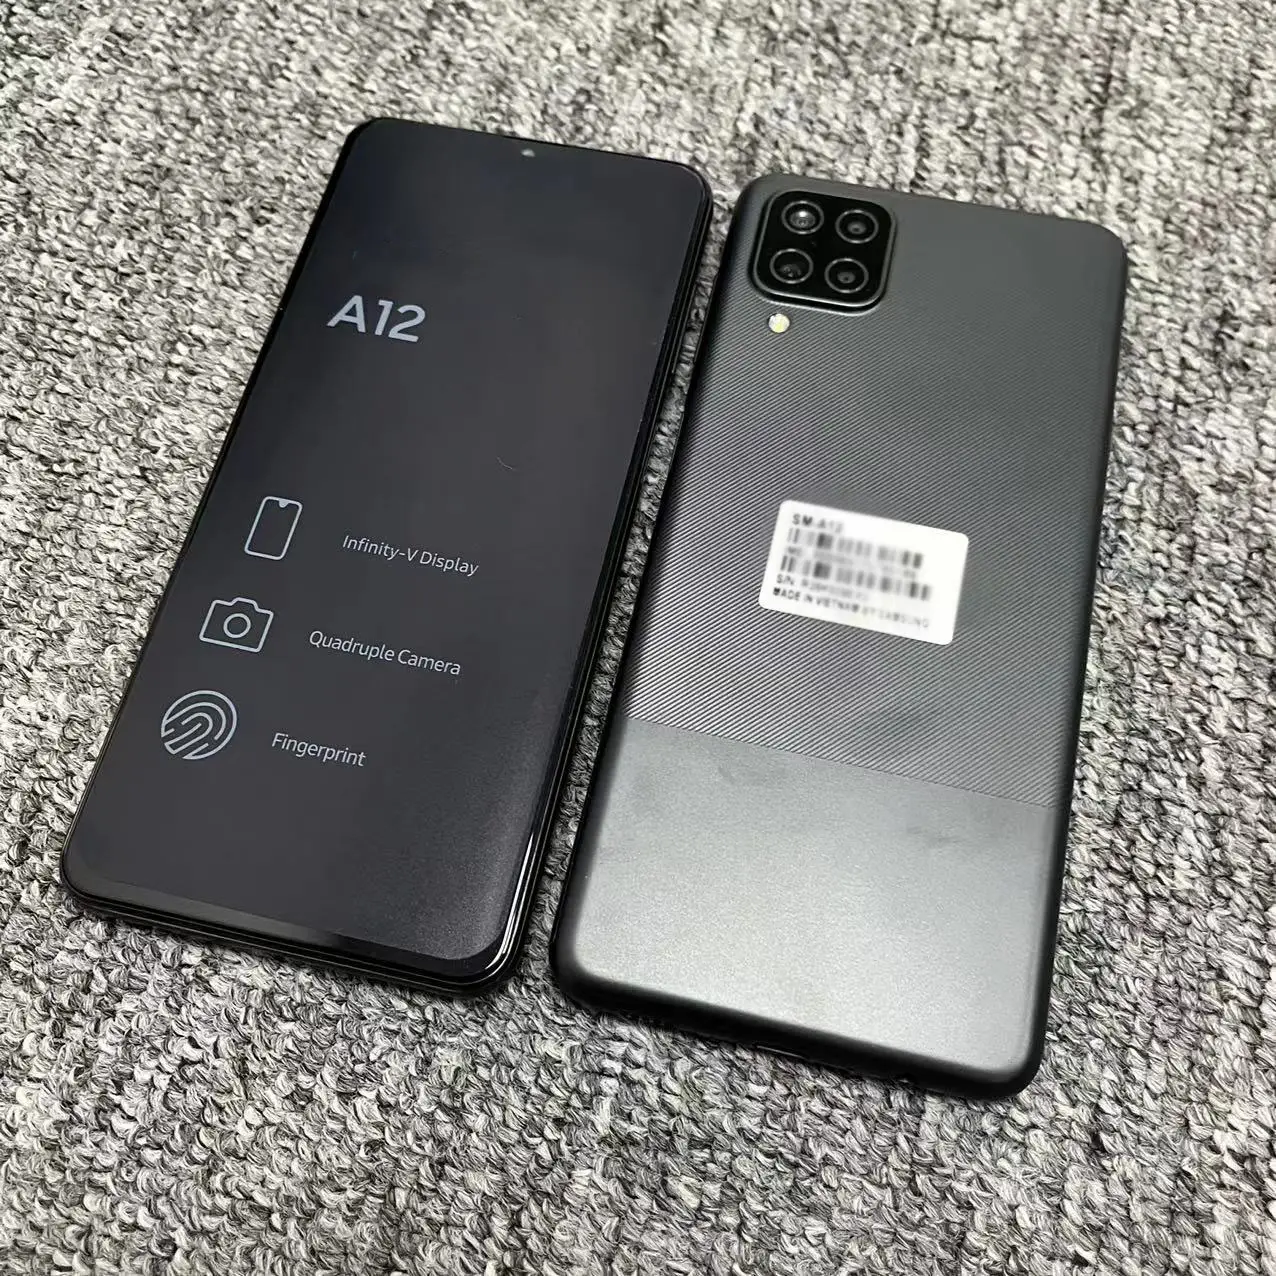 Marka kullanılan ikinci el cep telefonu orijinal Samsung A12 3 + 32GB Android kullanılan akıllı telefon telefonos celulares